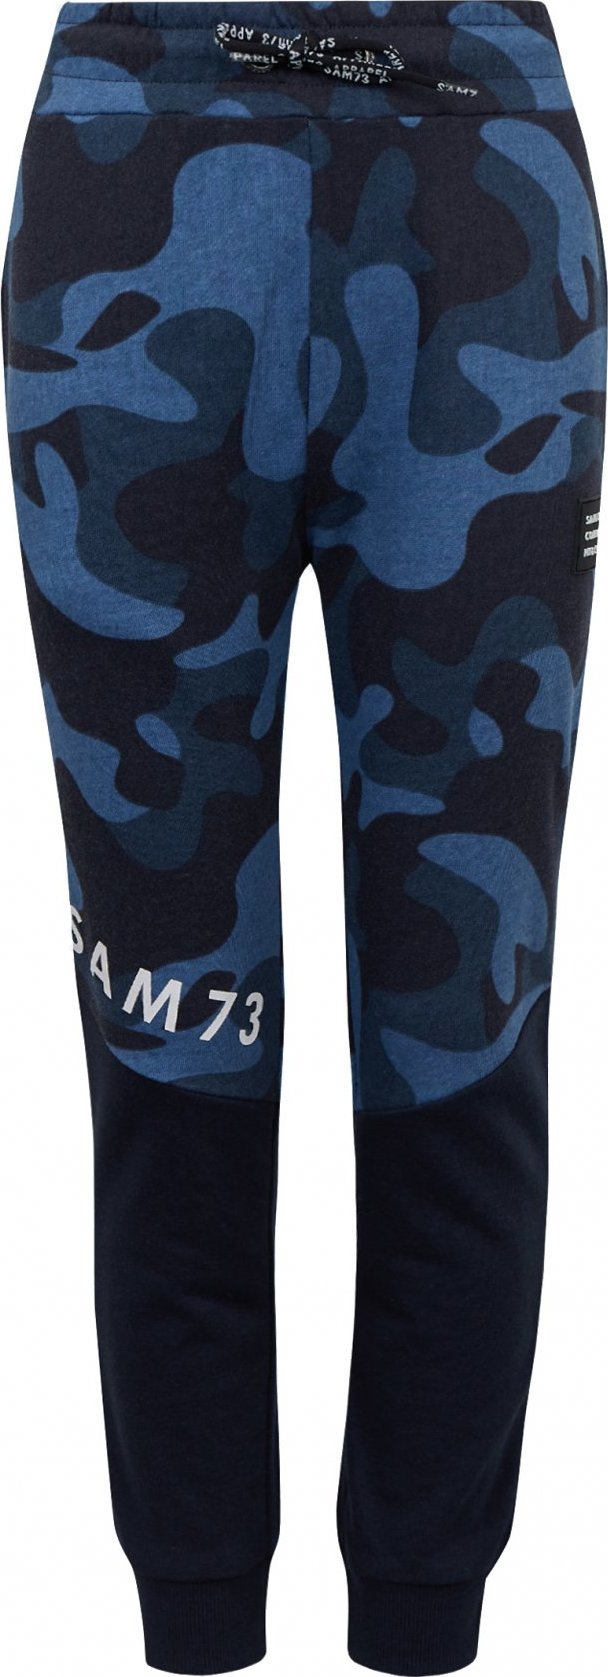 Chlapecké kalhoty SAM 73 Conrad modré Velikost: 104